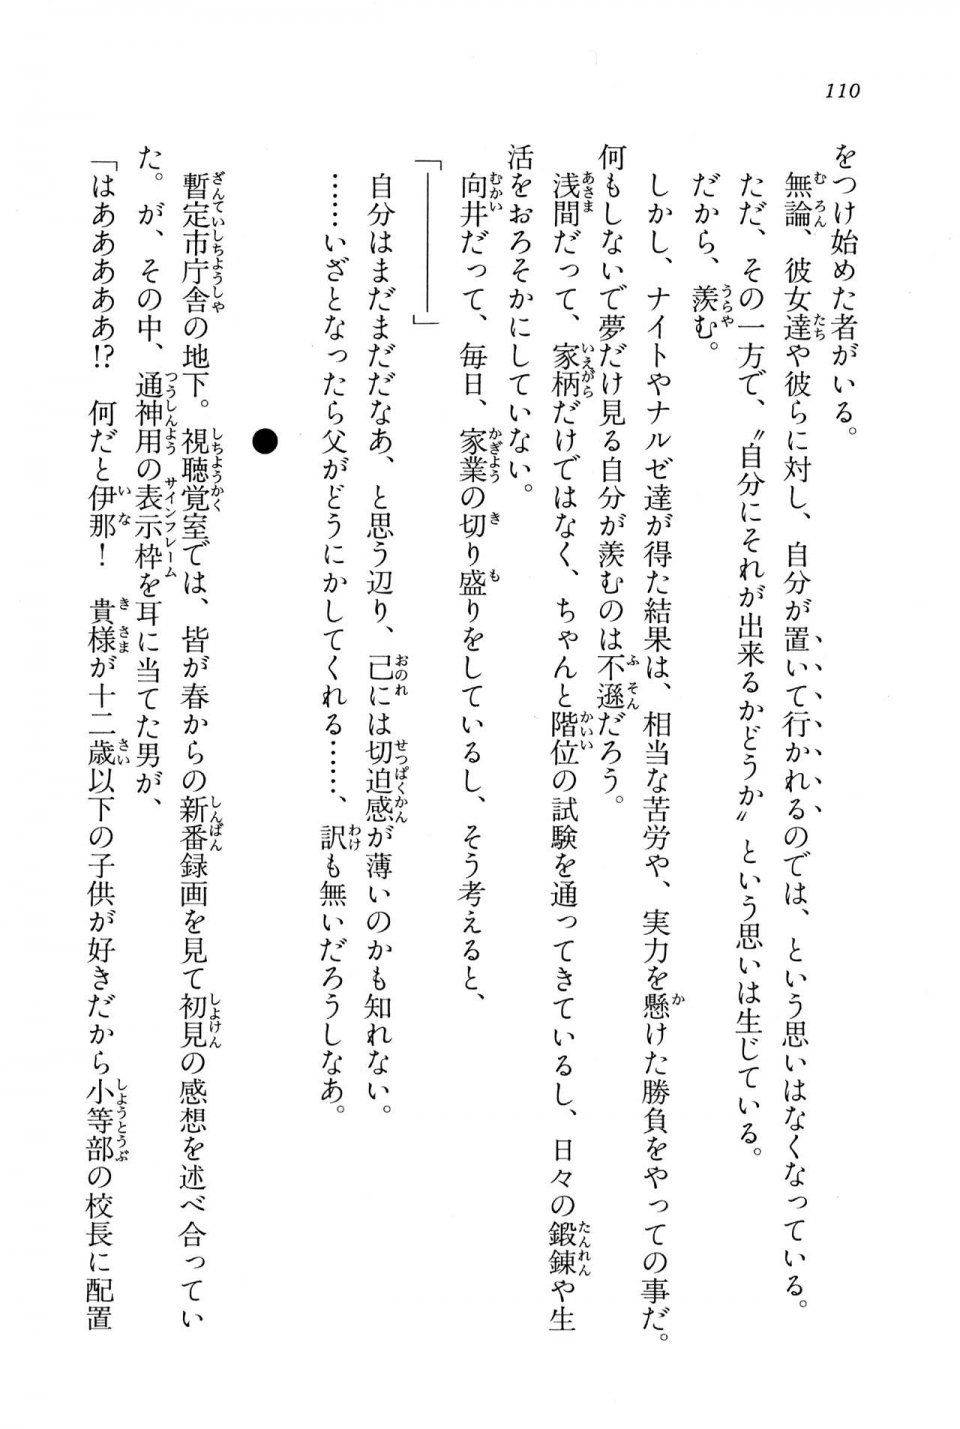 Kyoukai Senjou no Horizon BD Special Mininovel Vol 8(4B) - Photo #114